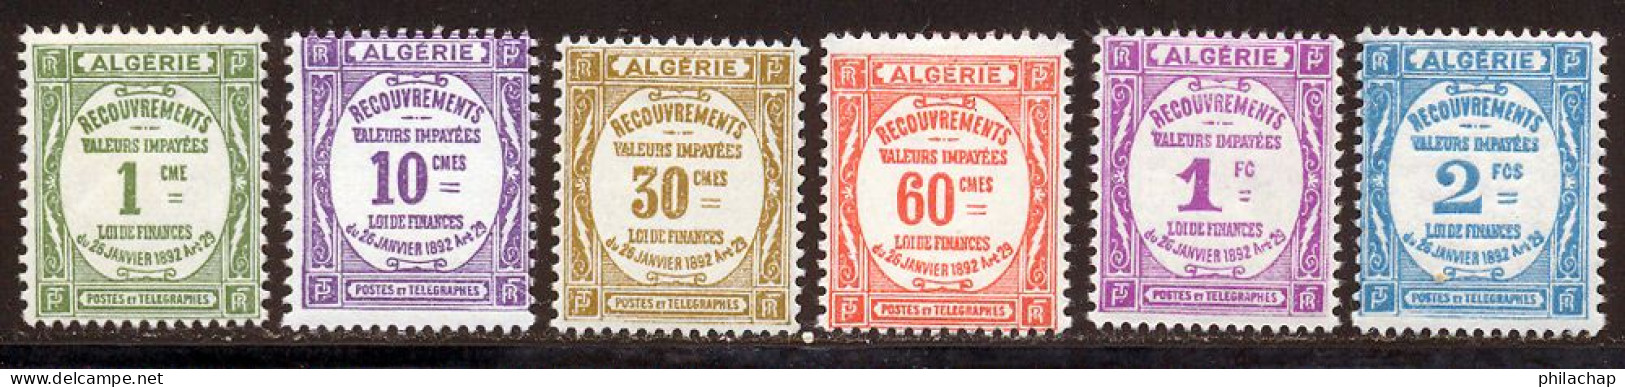 Algerie Taxe 1926 Yvert 15 / 20 * TB Charniere(s) - Impuestos